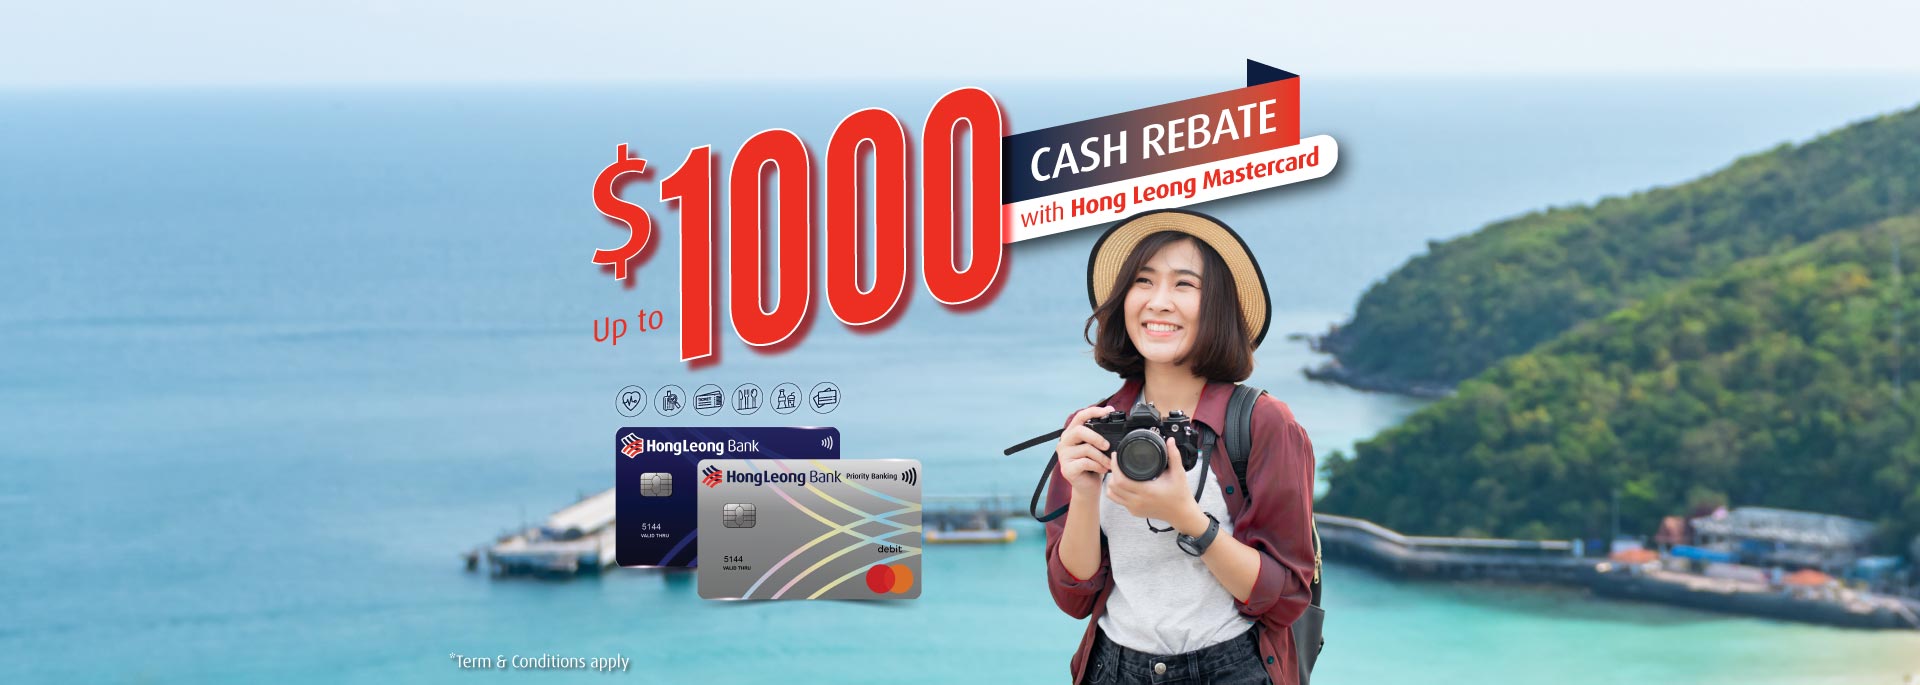 enjoy-up-to-1-000-exclusive-cash-rebate-with-hong-leong-bank-mastercard